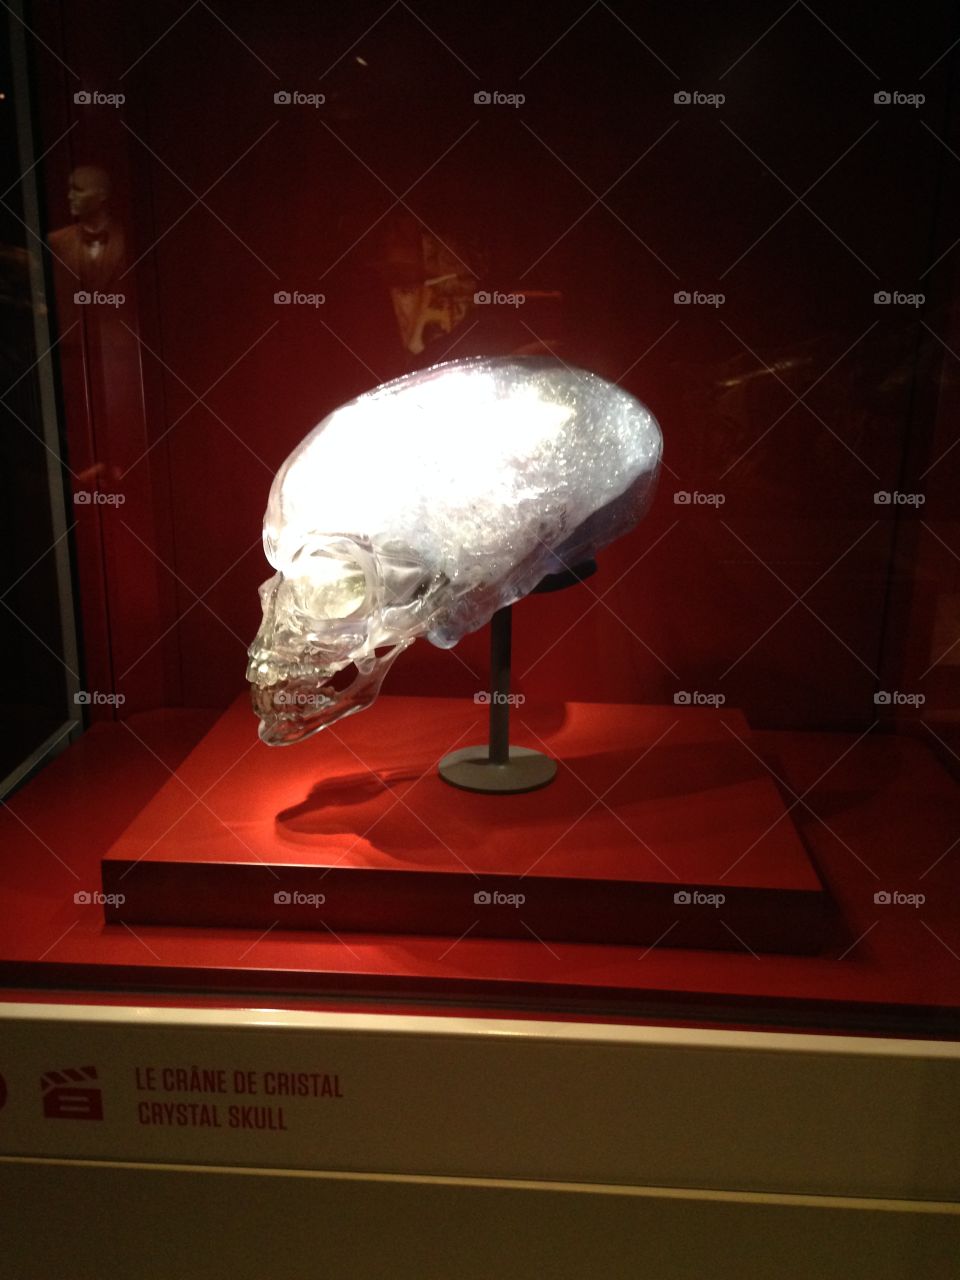 Crystal skull prop from the Indiana Jones movie